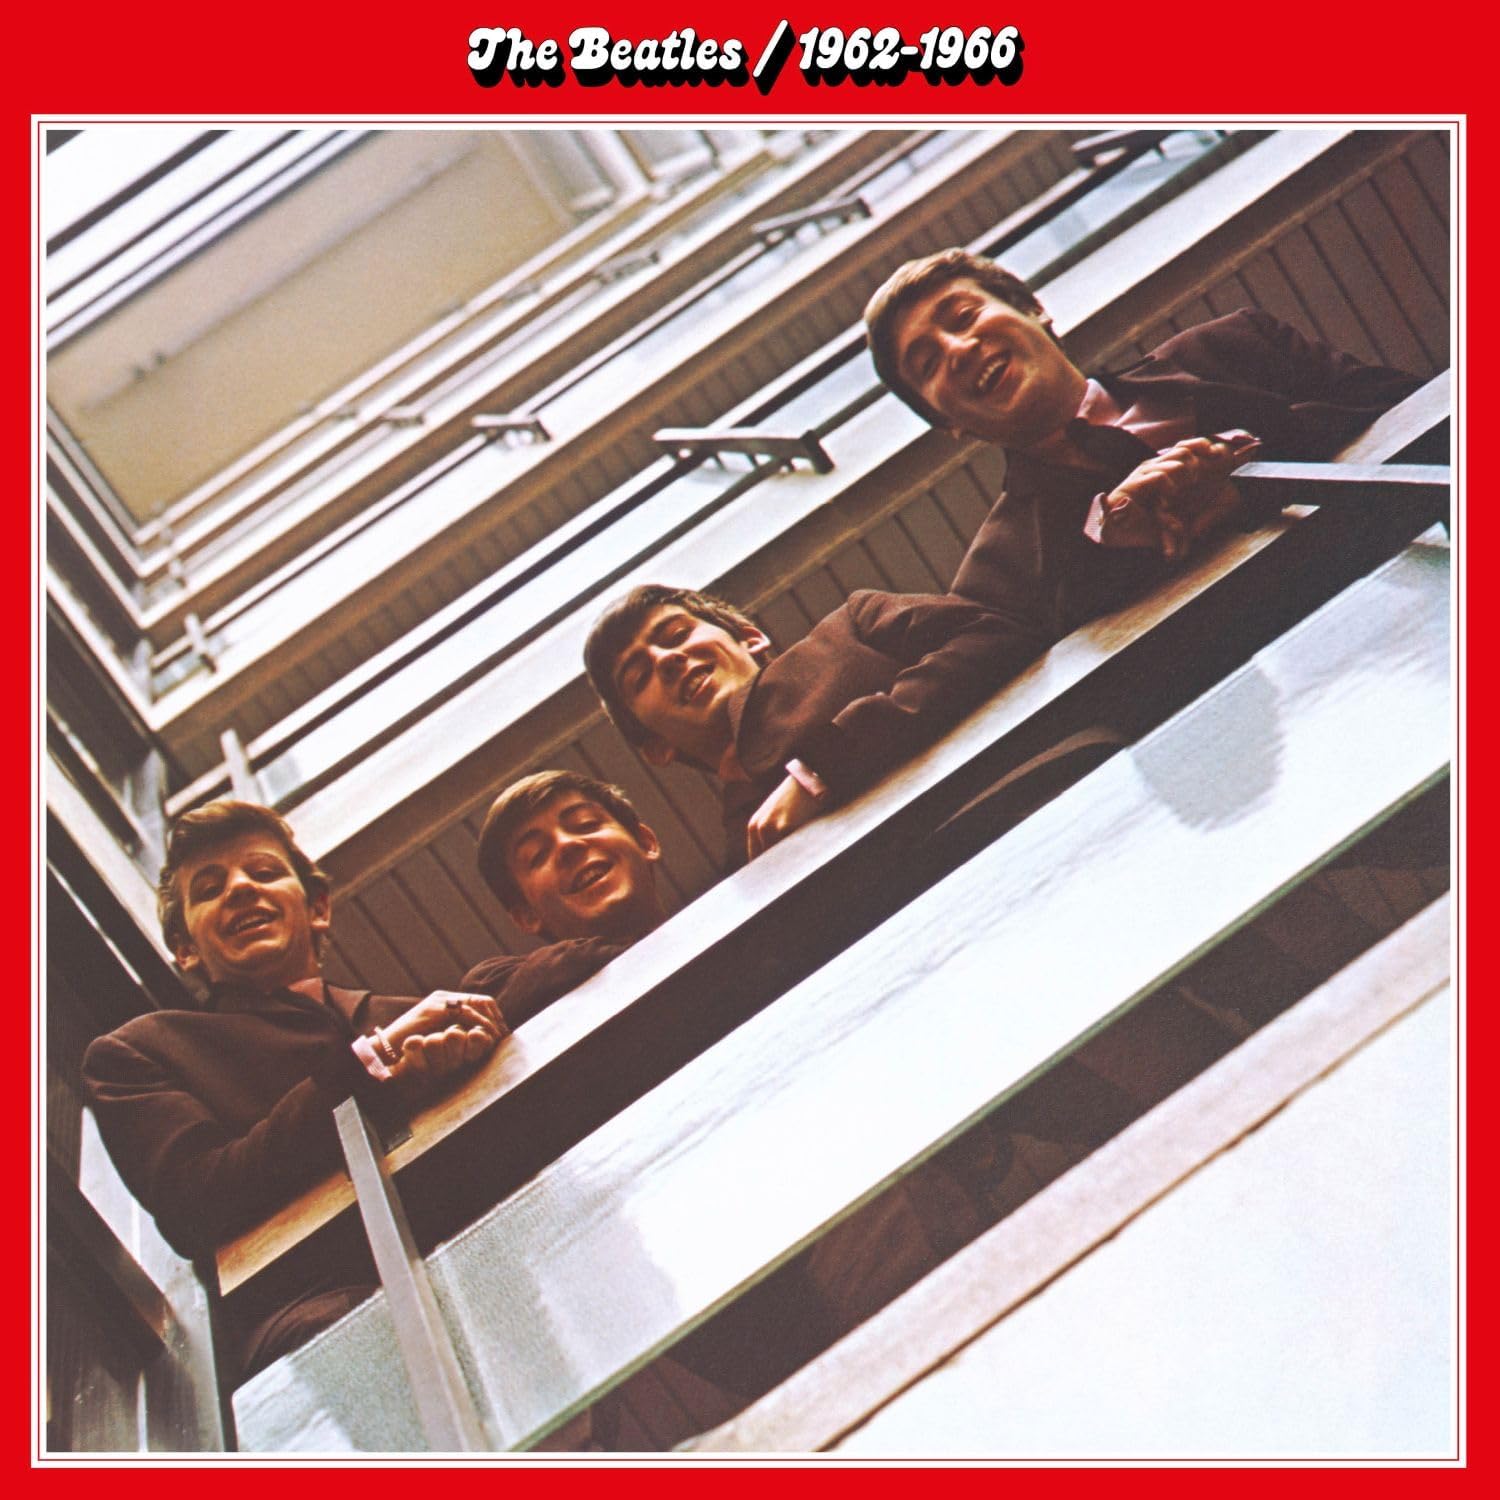 The Beatles 1962-66 CD album cover